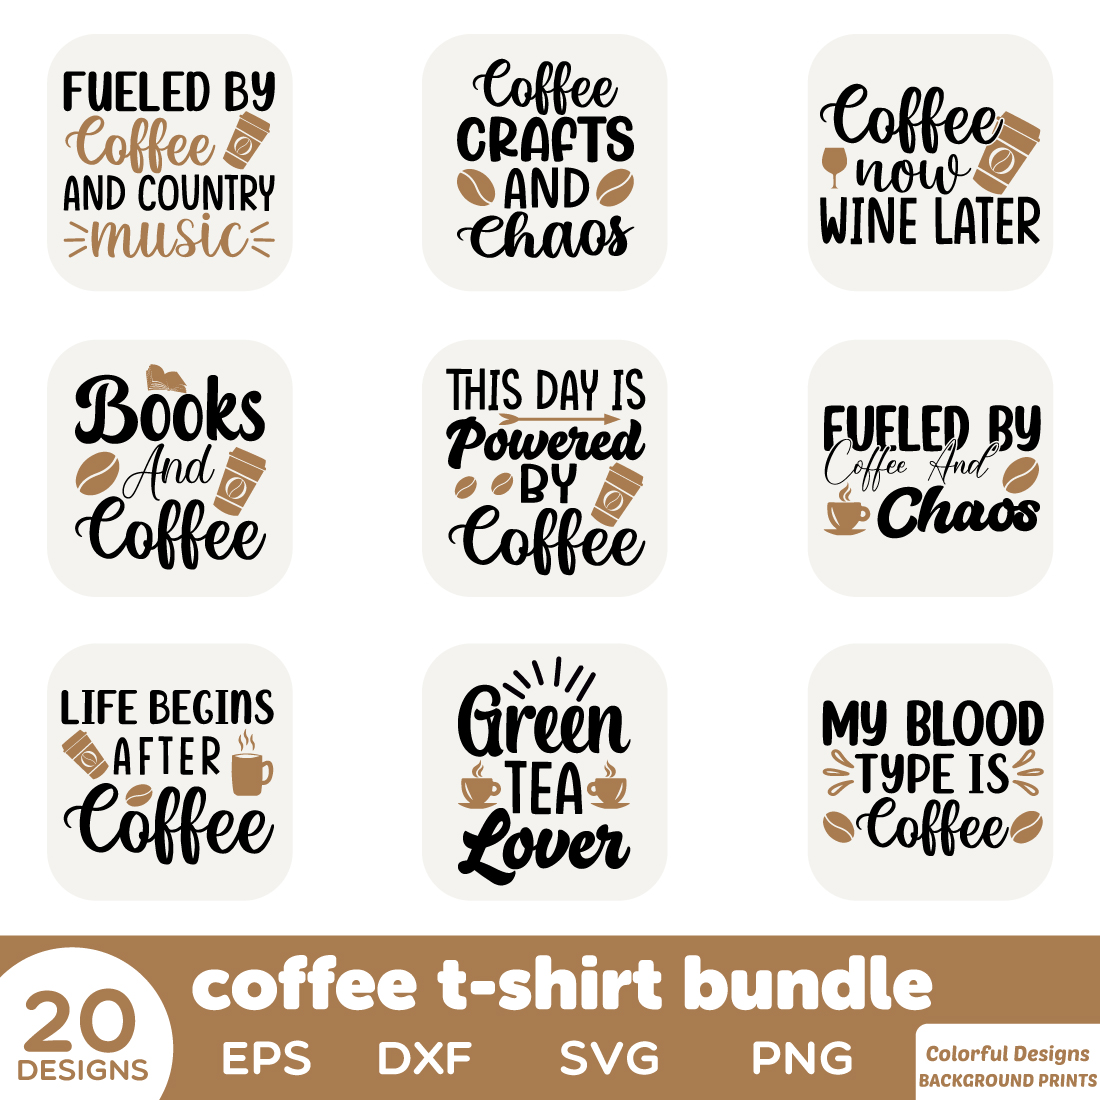 Coffee t-shirt bundle cover image.